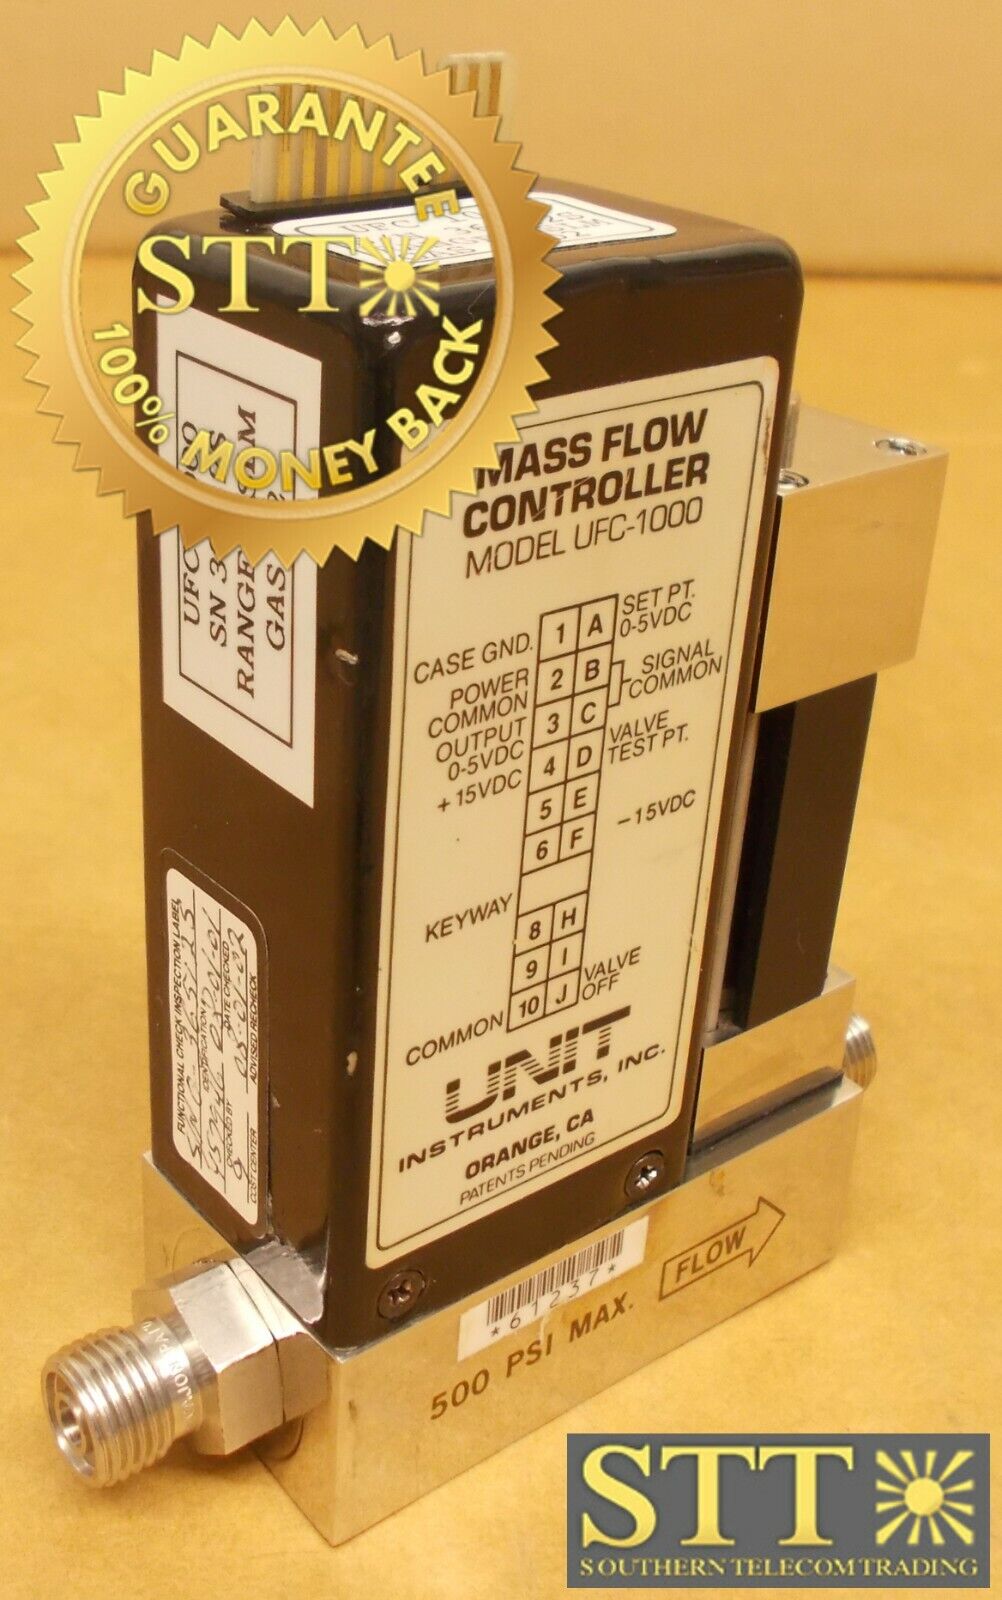 UFC-1000 UNIT MASS FLOW CONTROLLER MODEL UFC-1000 RANGE 5 SLM GAS O2